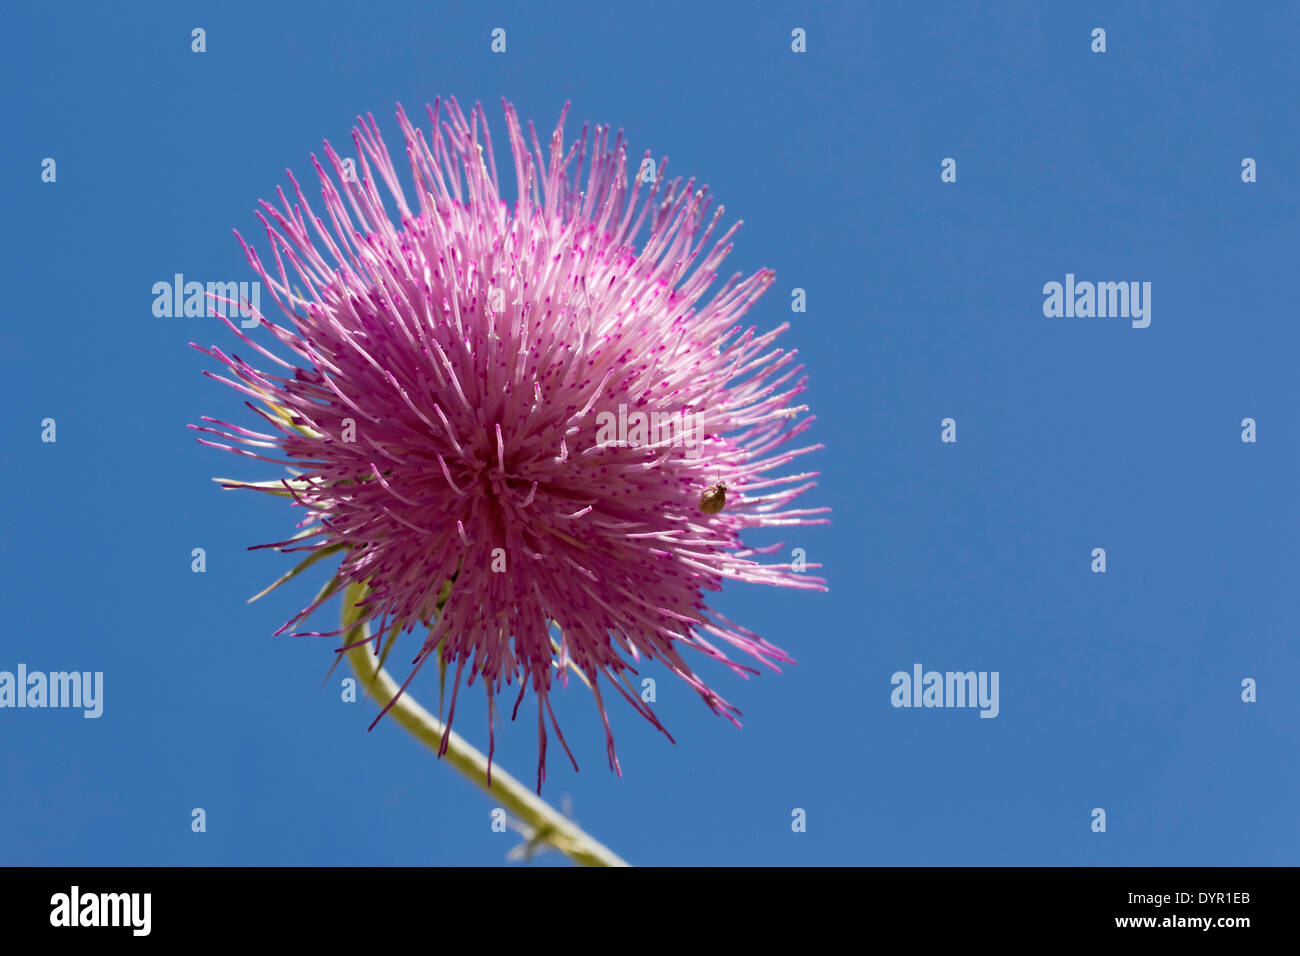 Thistle flower against a blue sky Stock Photo